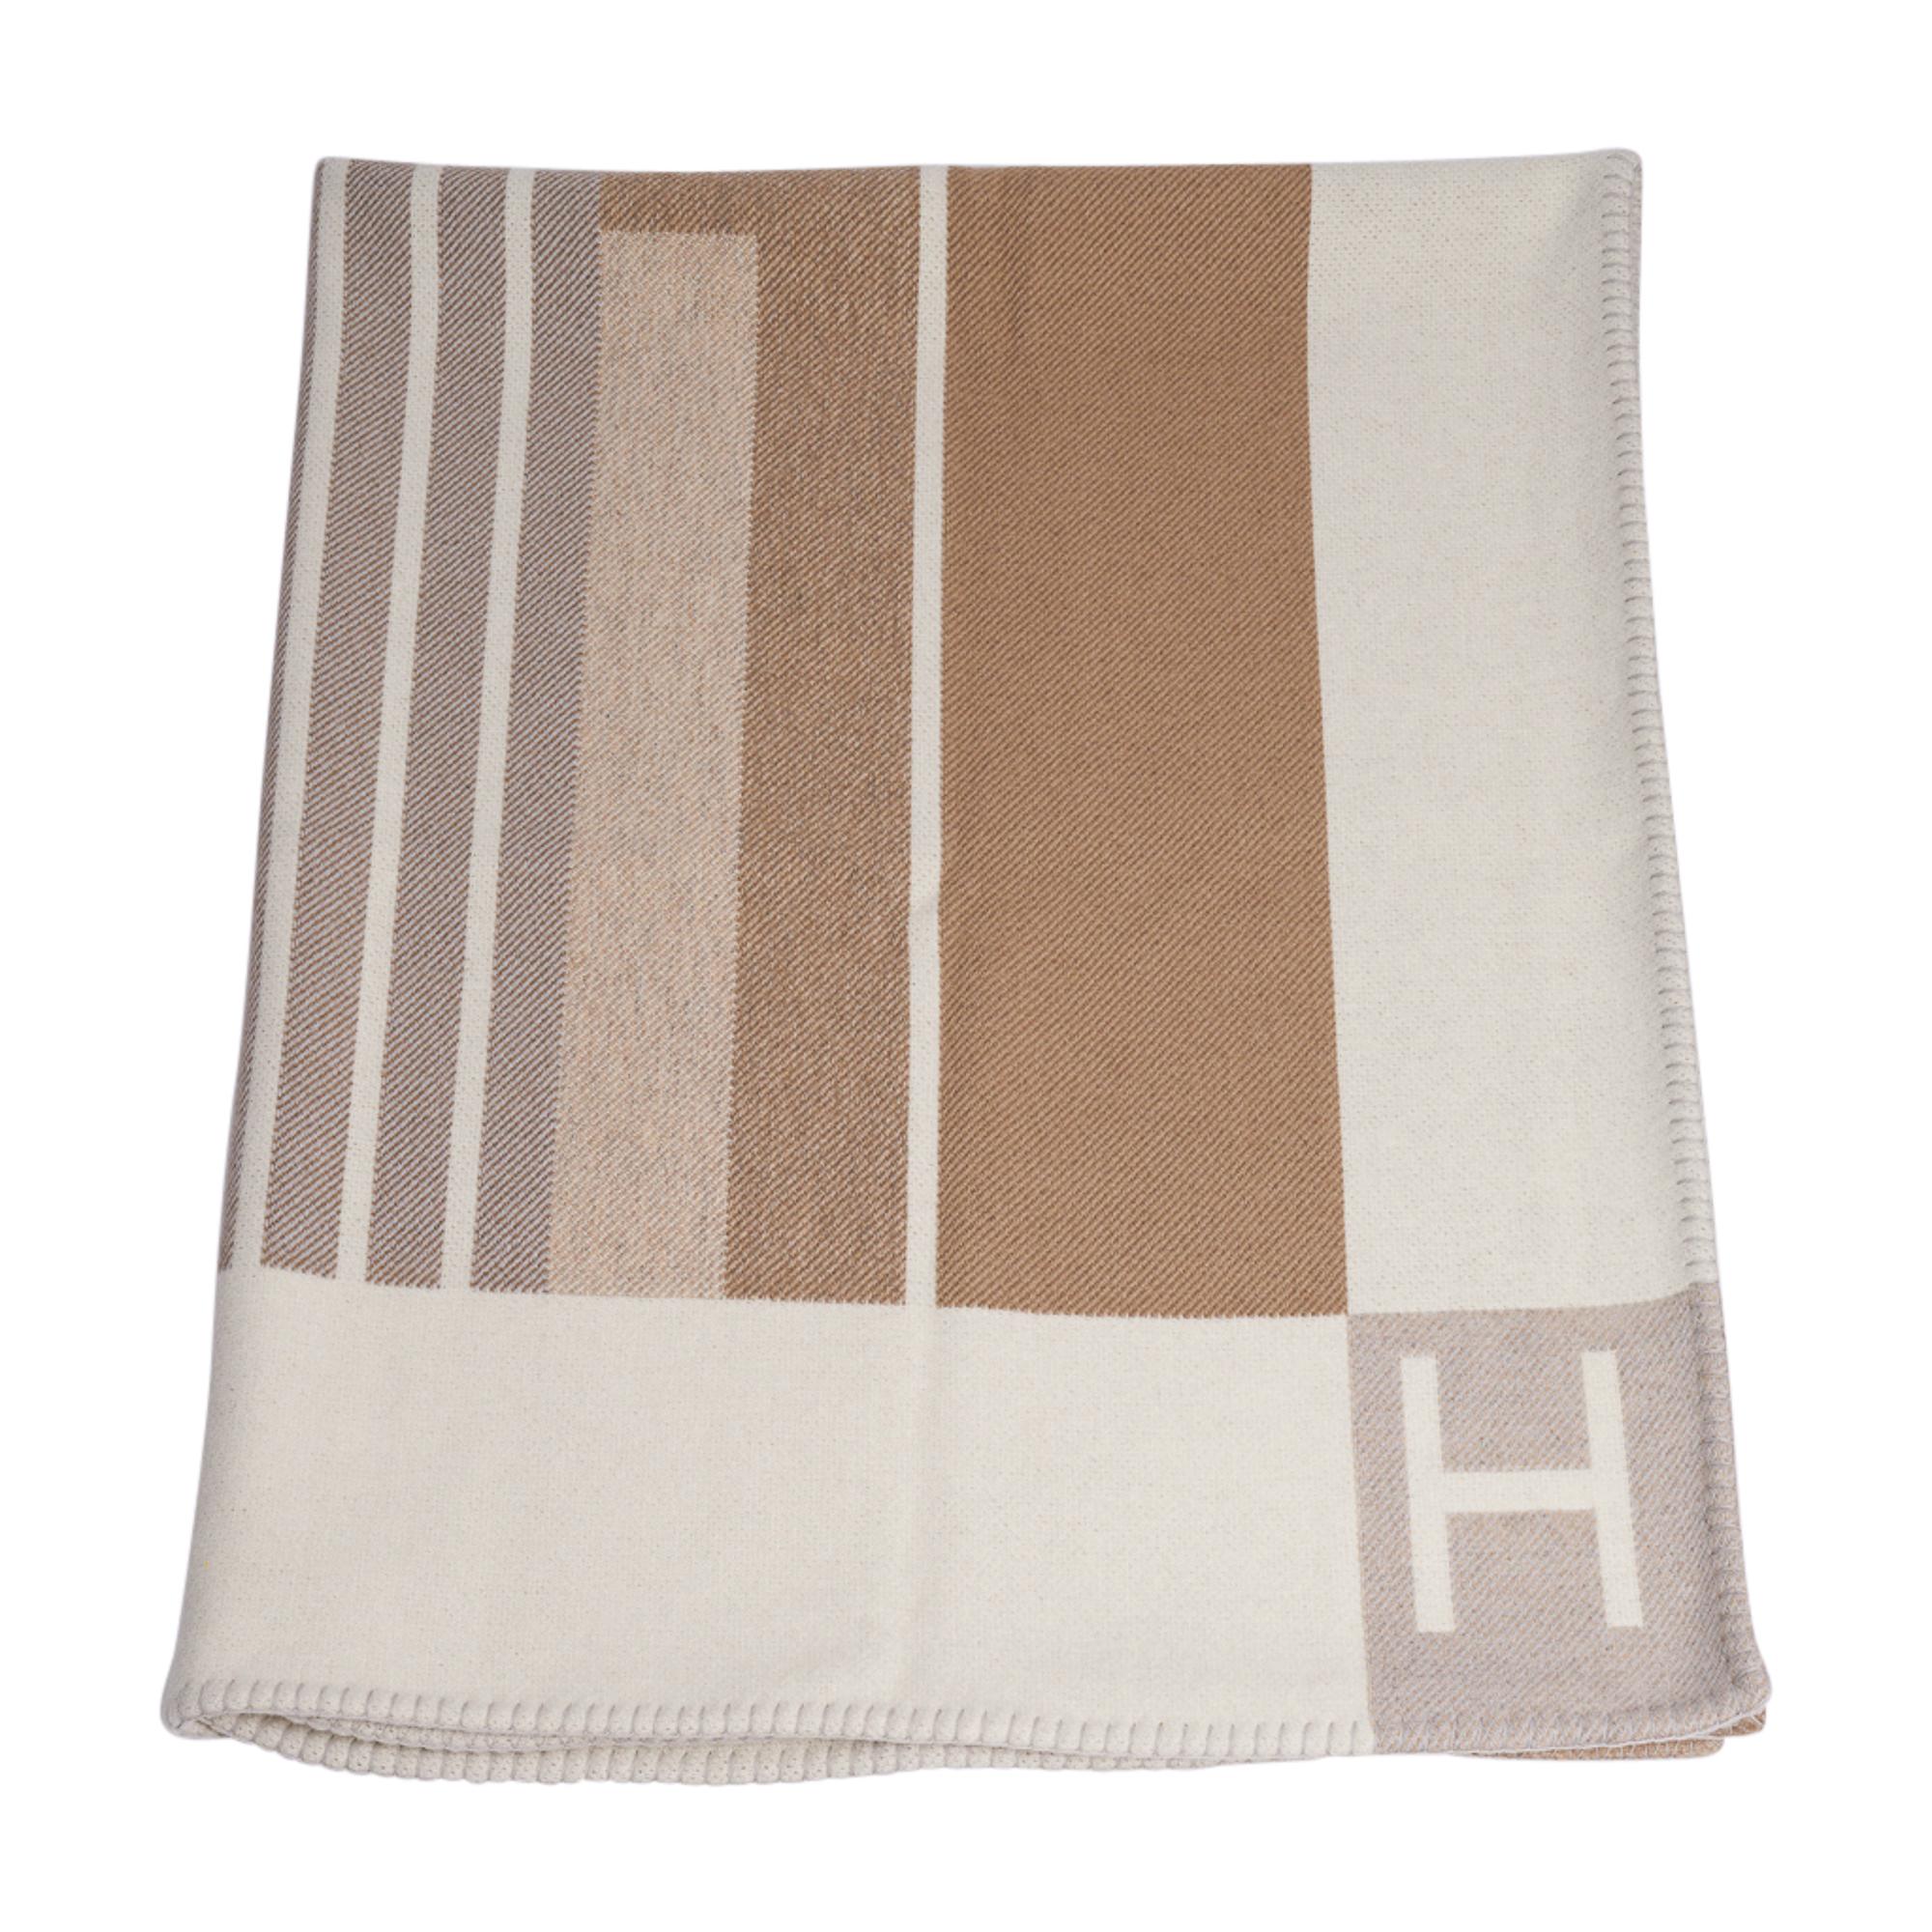 Brown Hermes Avalon Vibration Throw Blanket Ecru Naturel Wool / Cashmere New